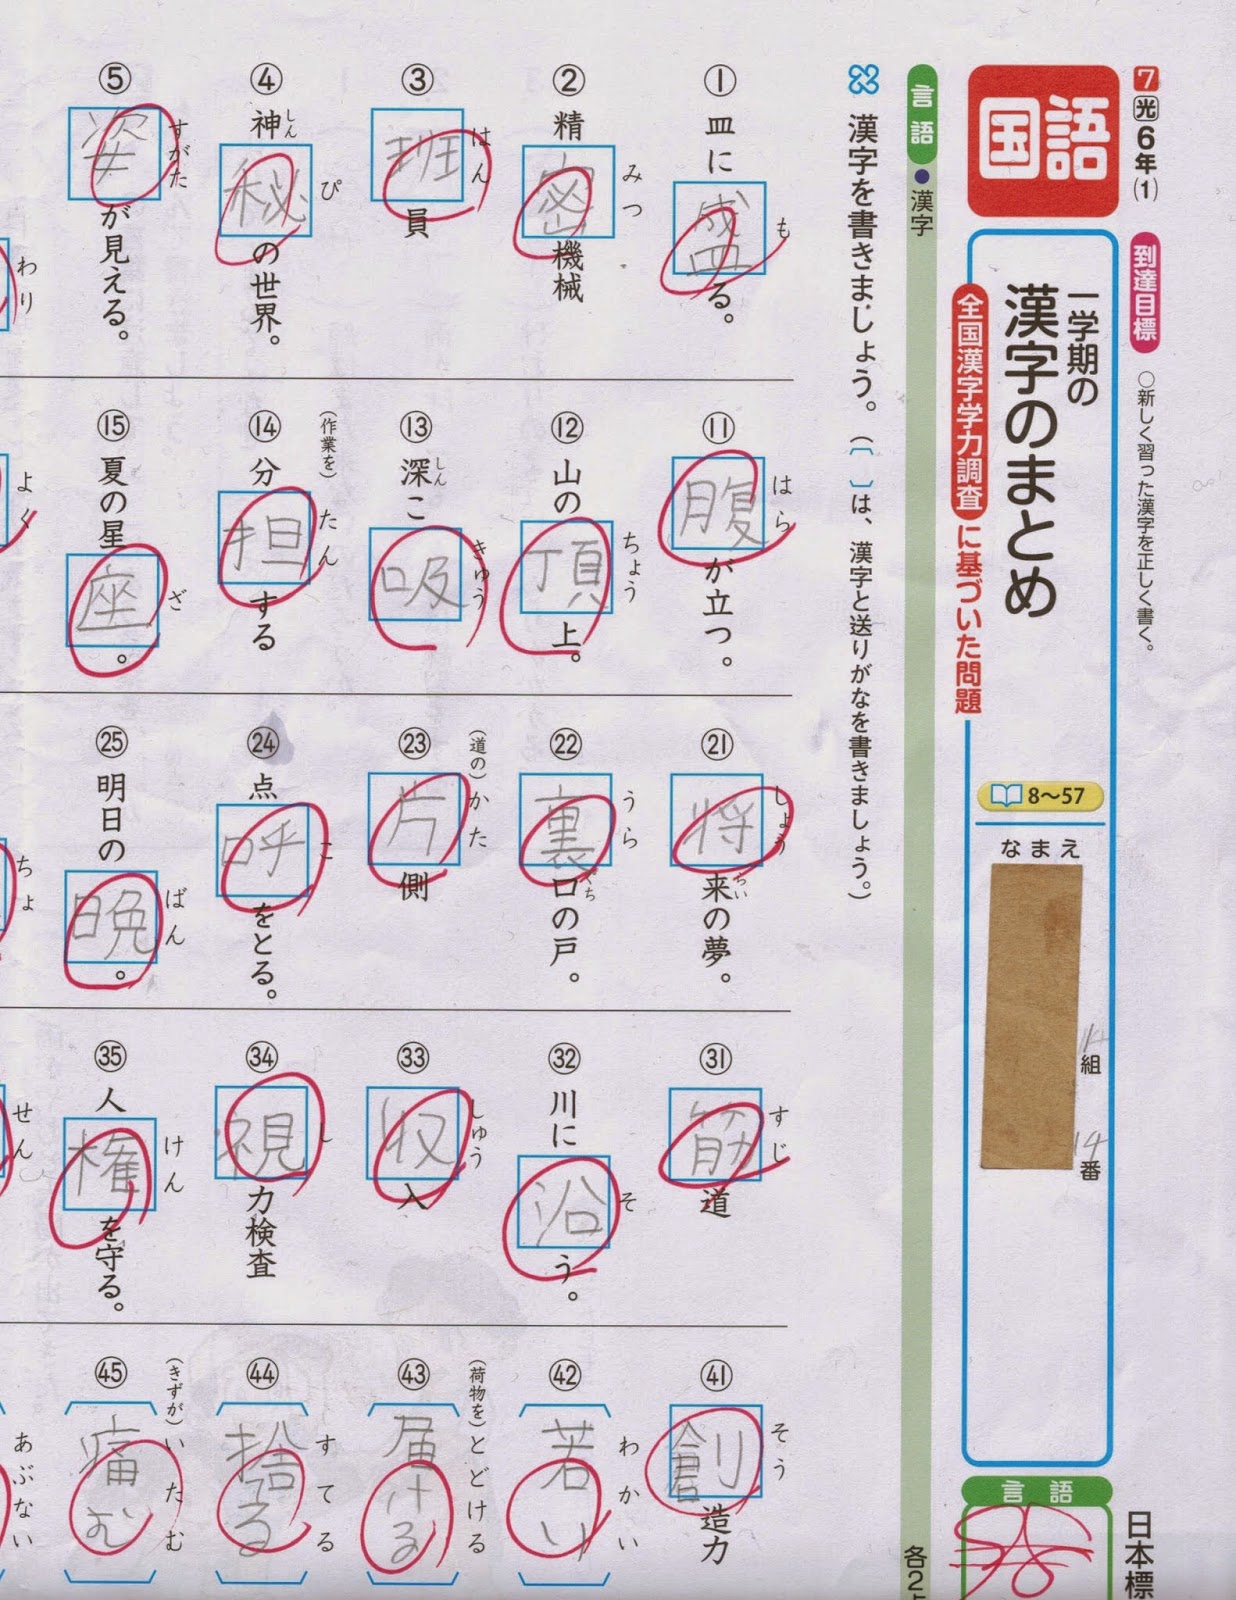 On Dyslexia 道村式漢字カードで勉強して1年 大きな成果と 漢字学習の次なる課題